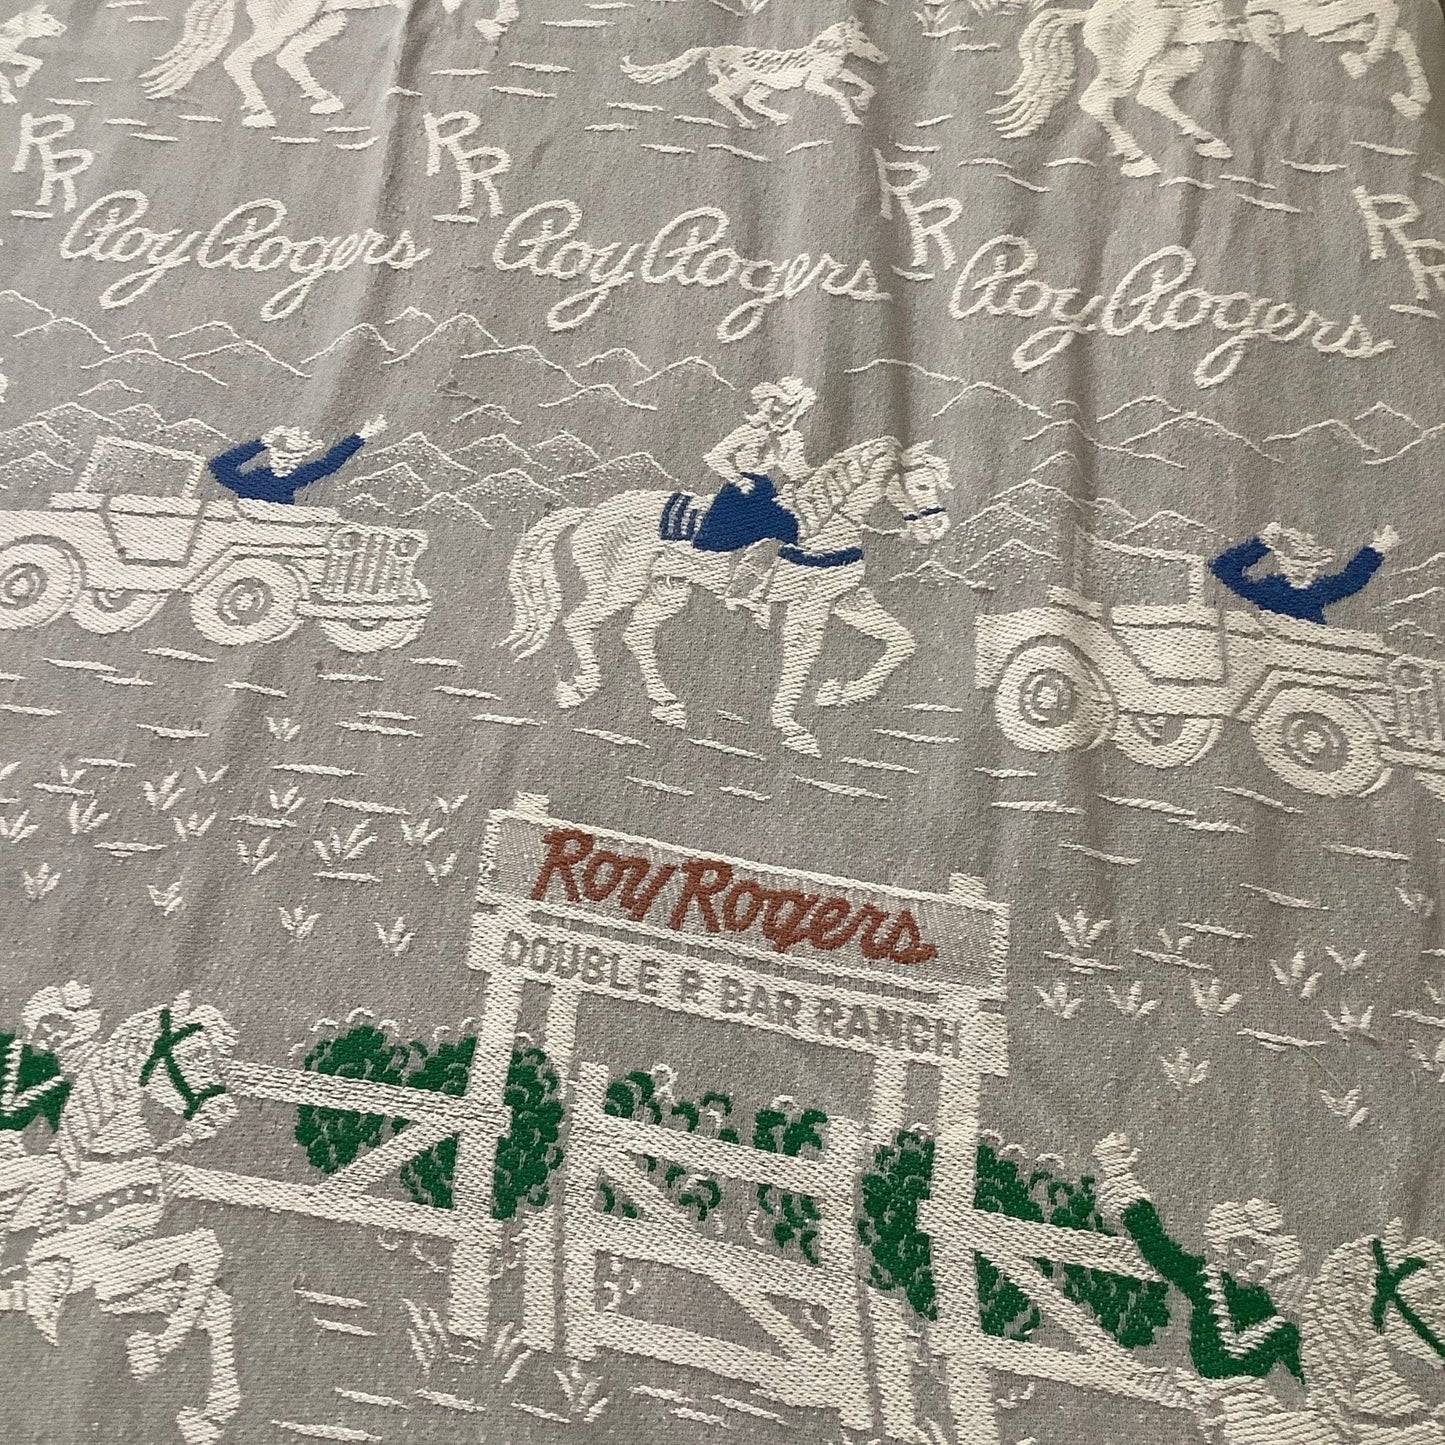 1950s Roy Rogers Bedding Multi / Cotton / Vintage 1950s